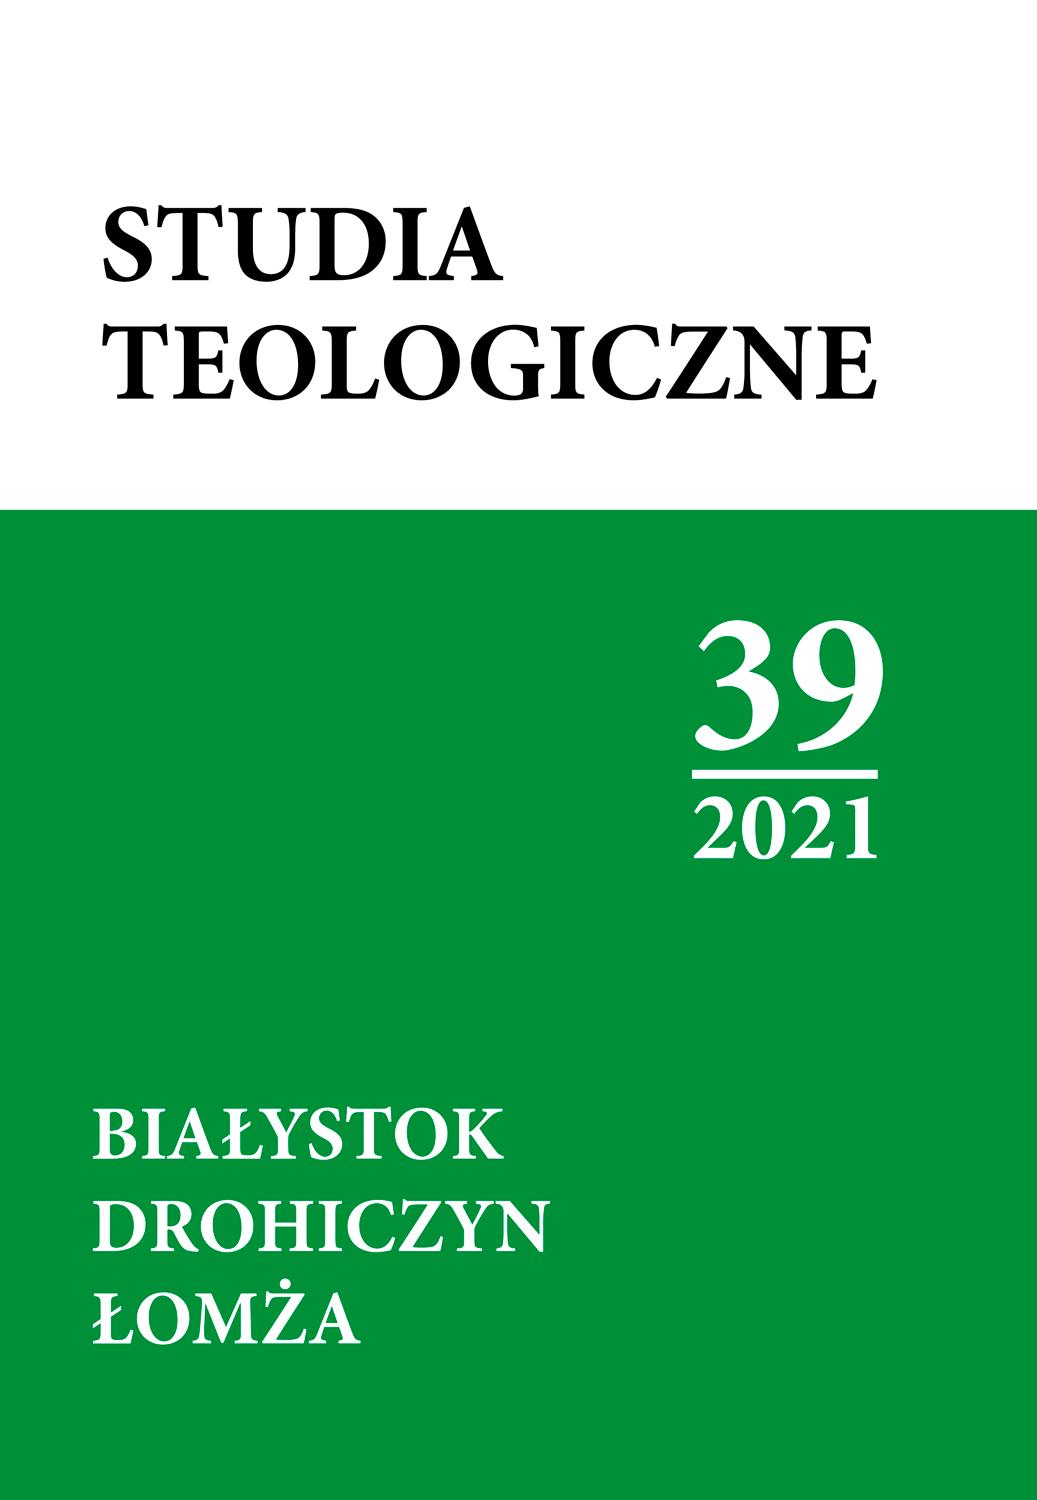 The genesis of the writings of St. Faustina Kowalska and Alicja Lenczewska Cover Image